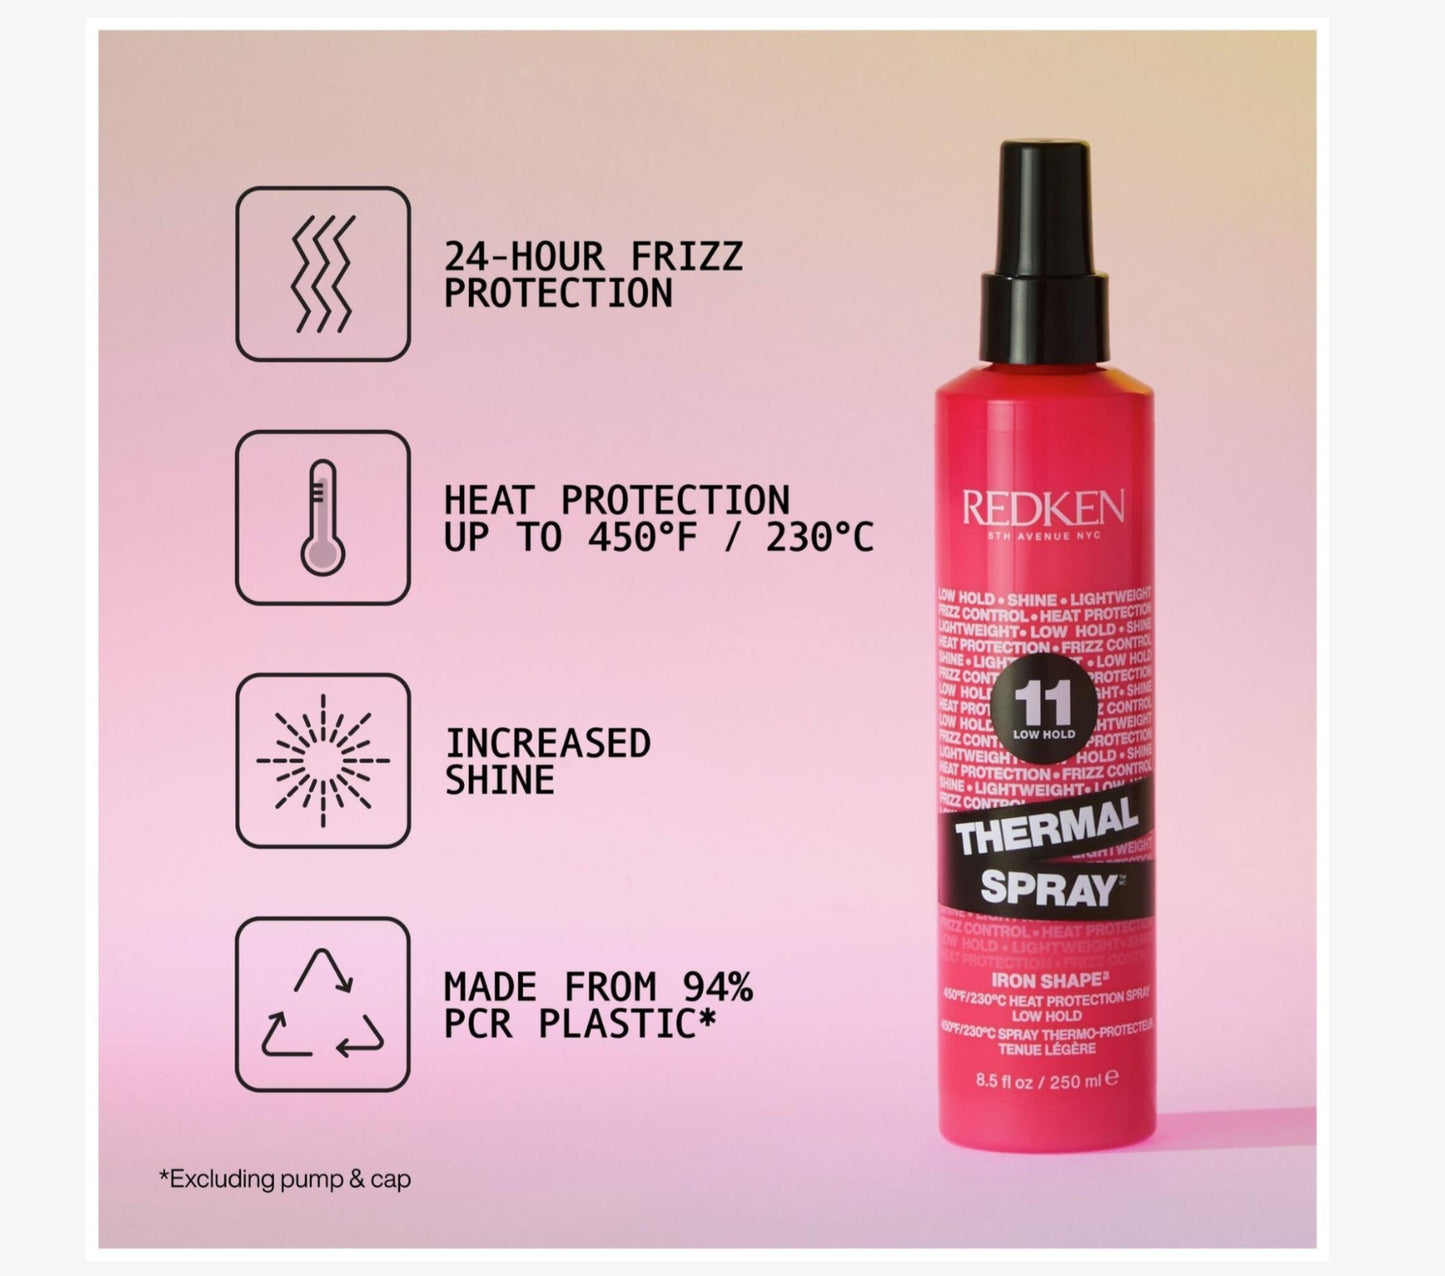 Redken Thermal Spray #11 Low Hold